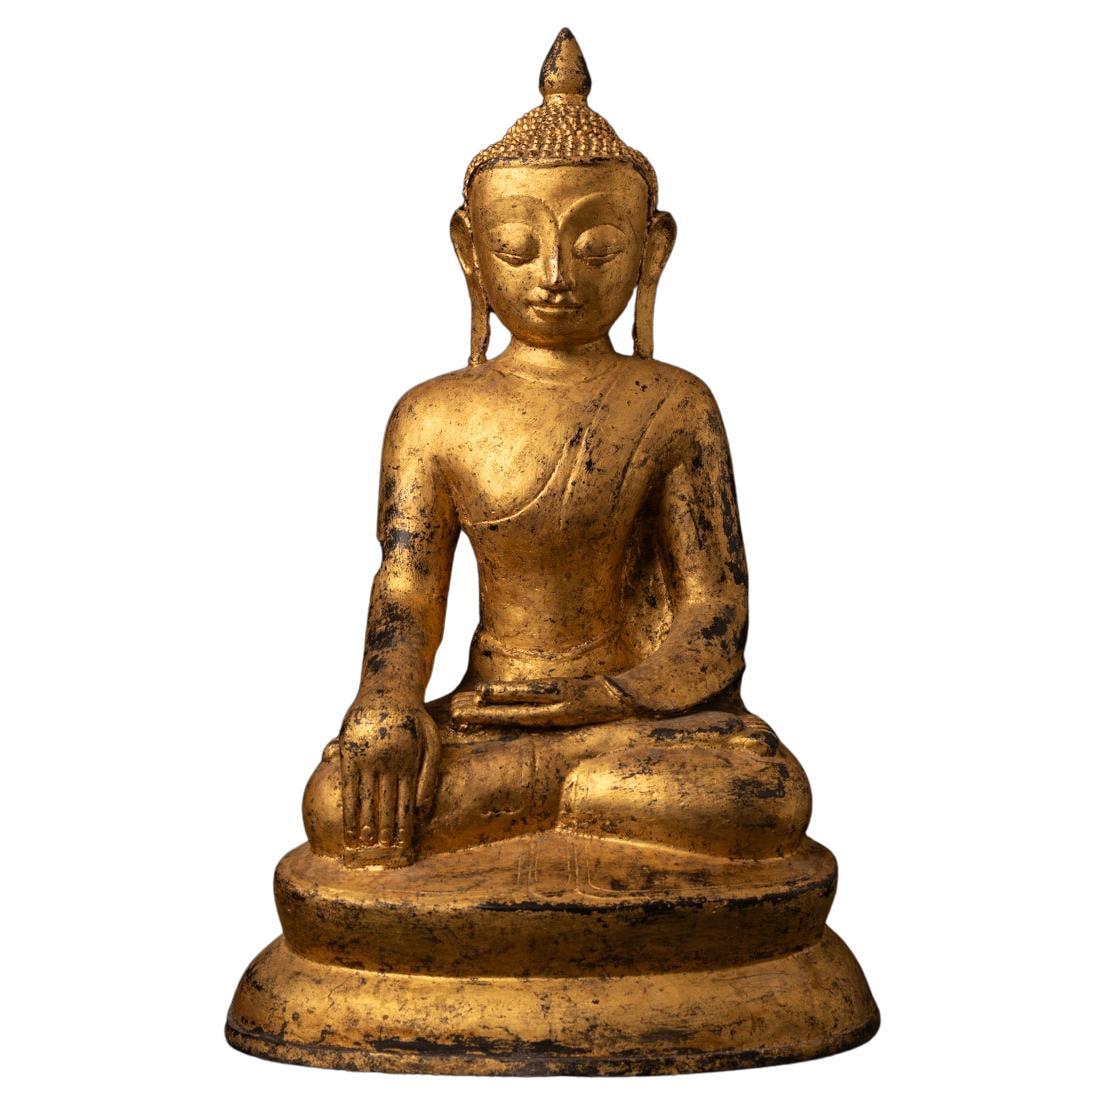 Bouddha birman de Birmanie du 18e siècle spécial en bronze ancien